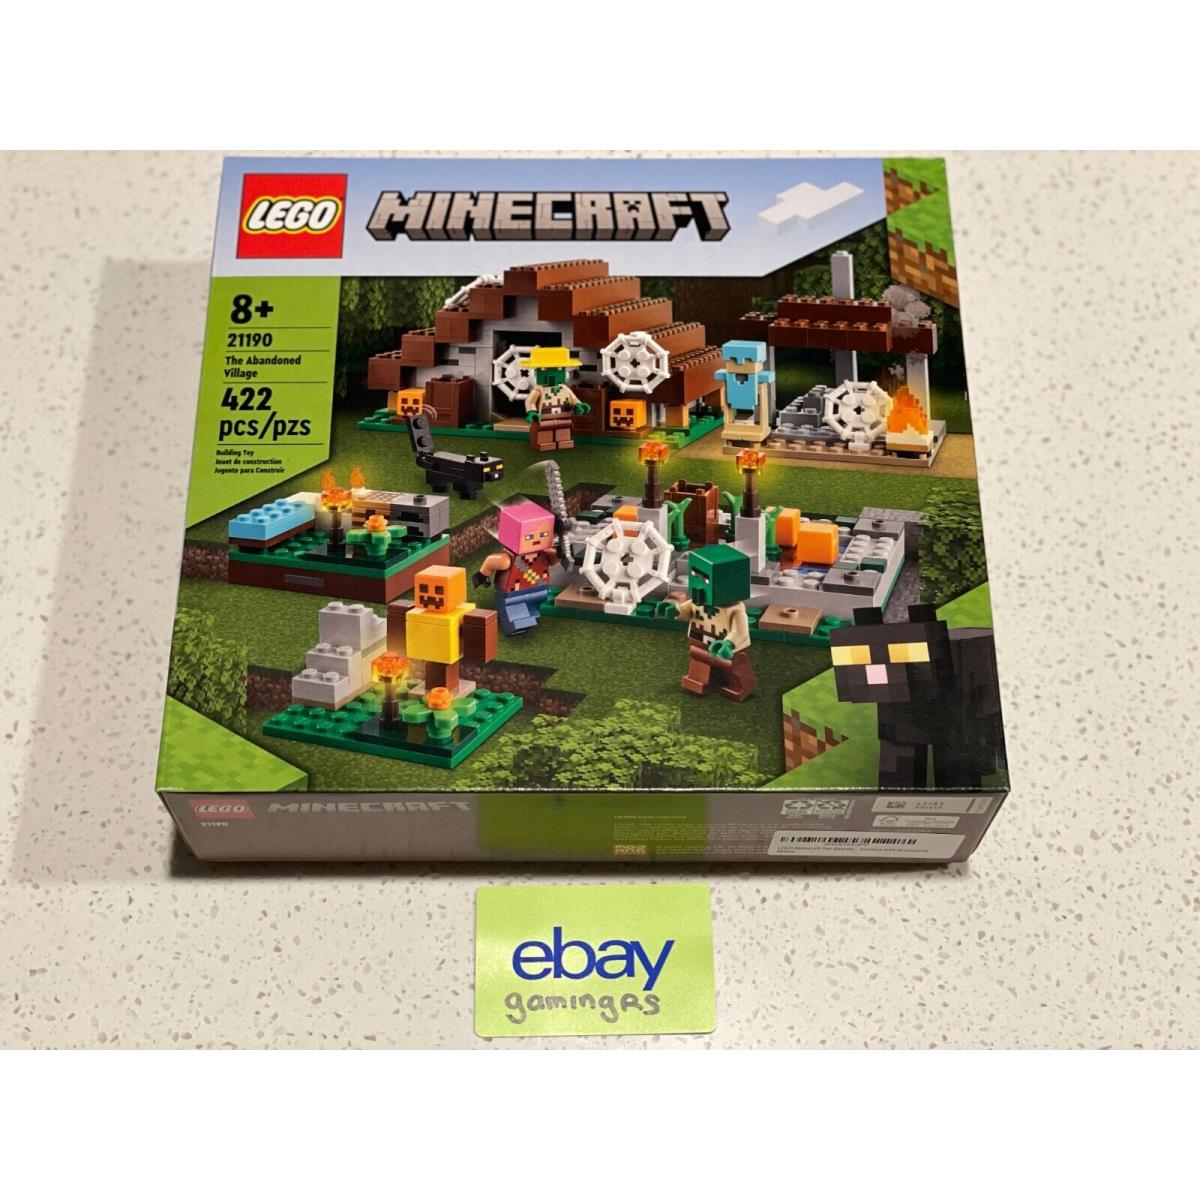 Lego Minecraft The Abandoned Village 21190 Building Set Ships Now